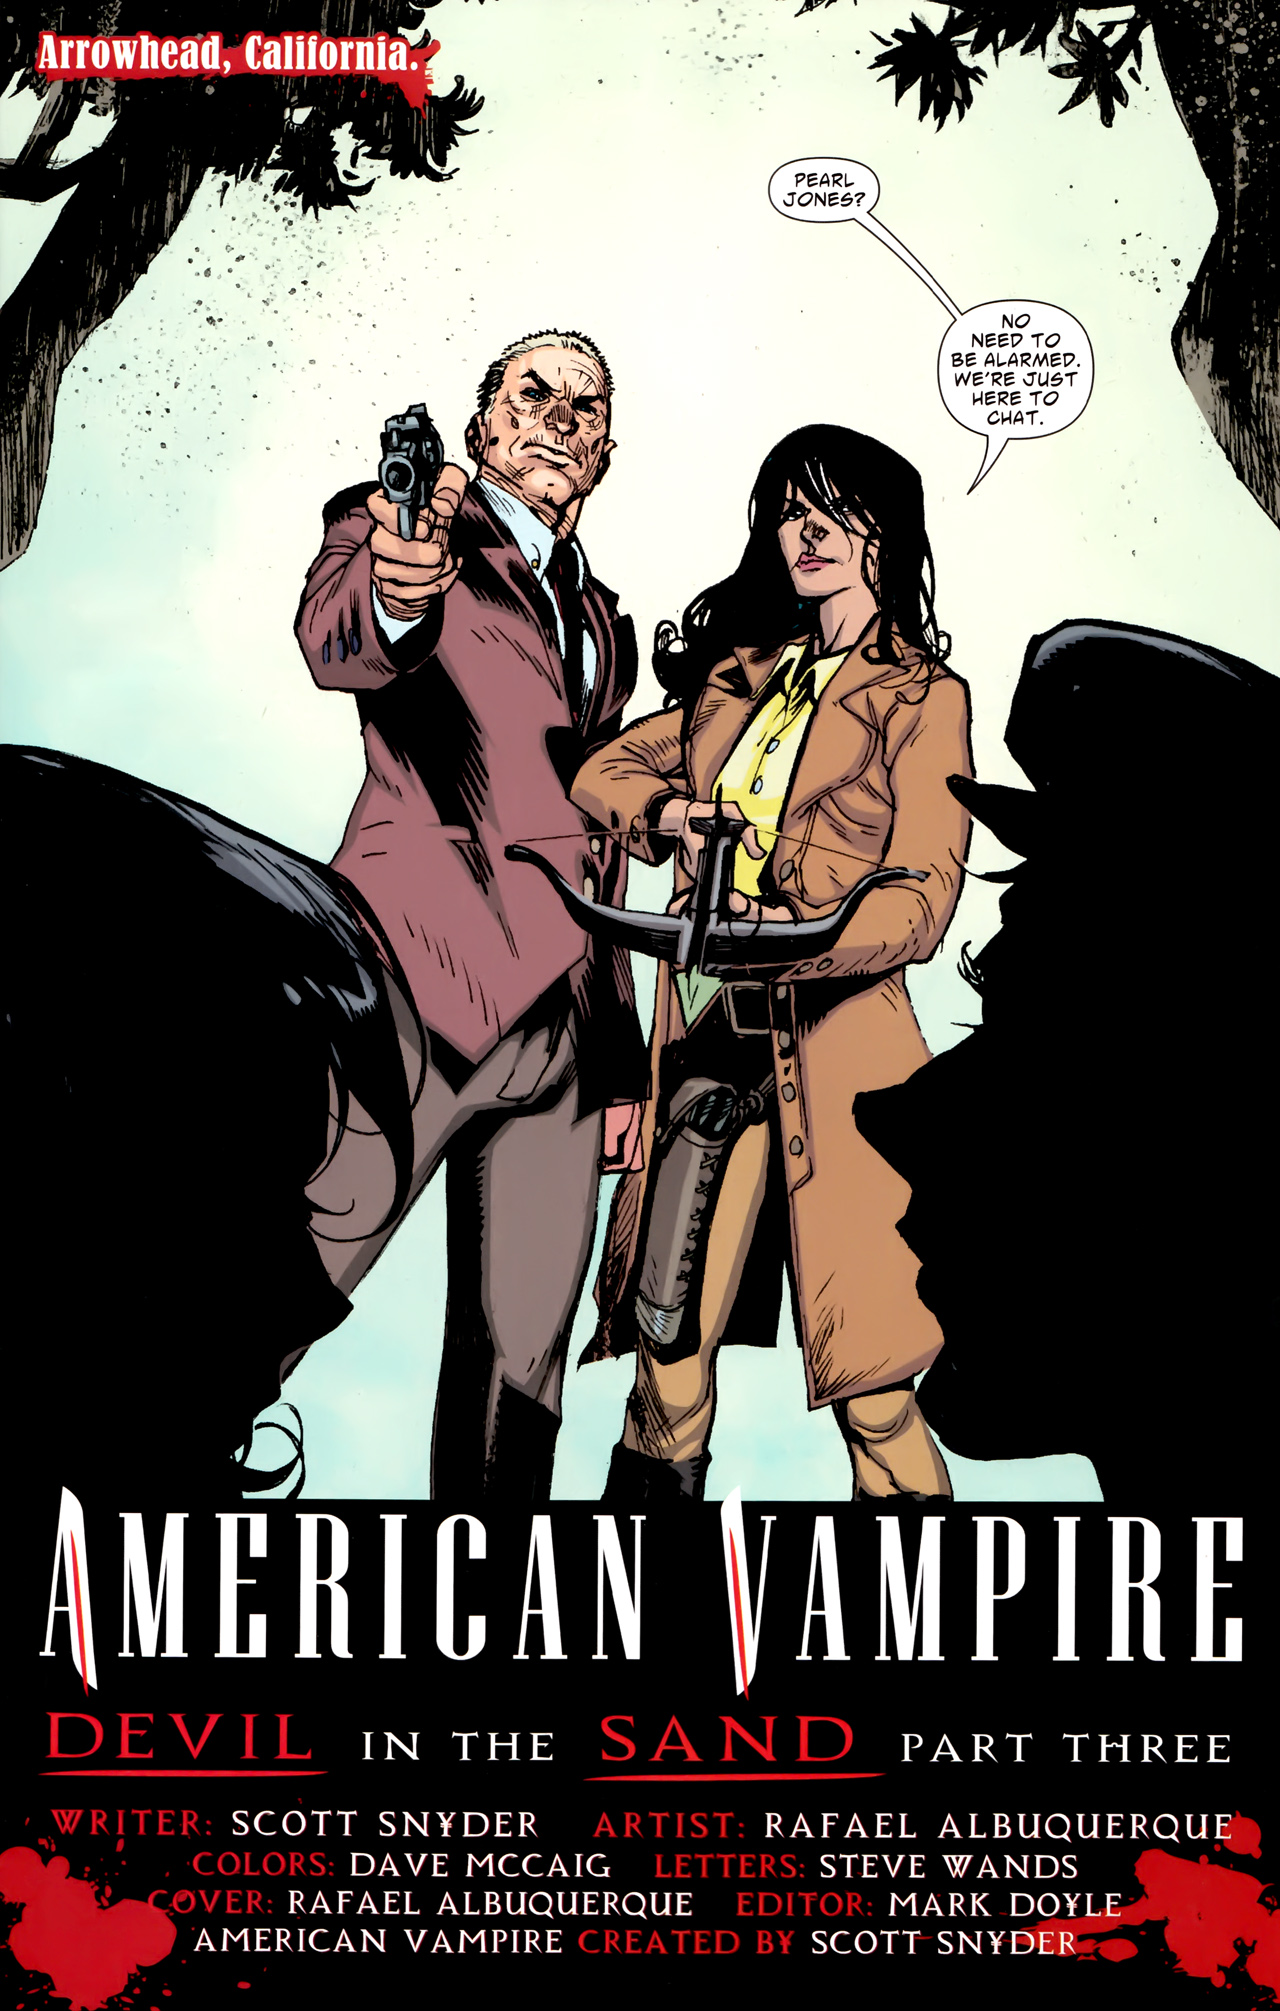 American Vampire #8 - Devil in the Sand, Part Three